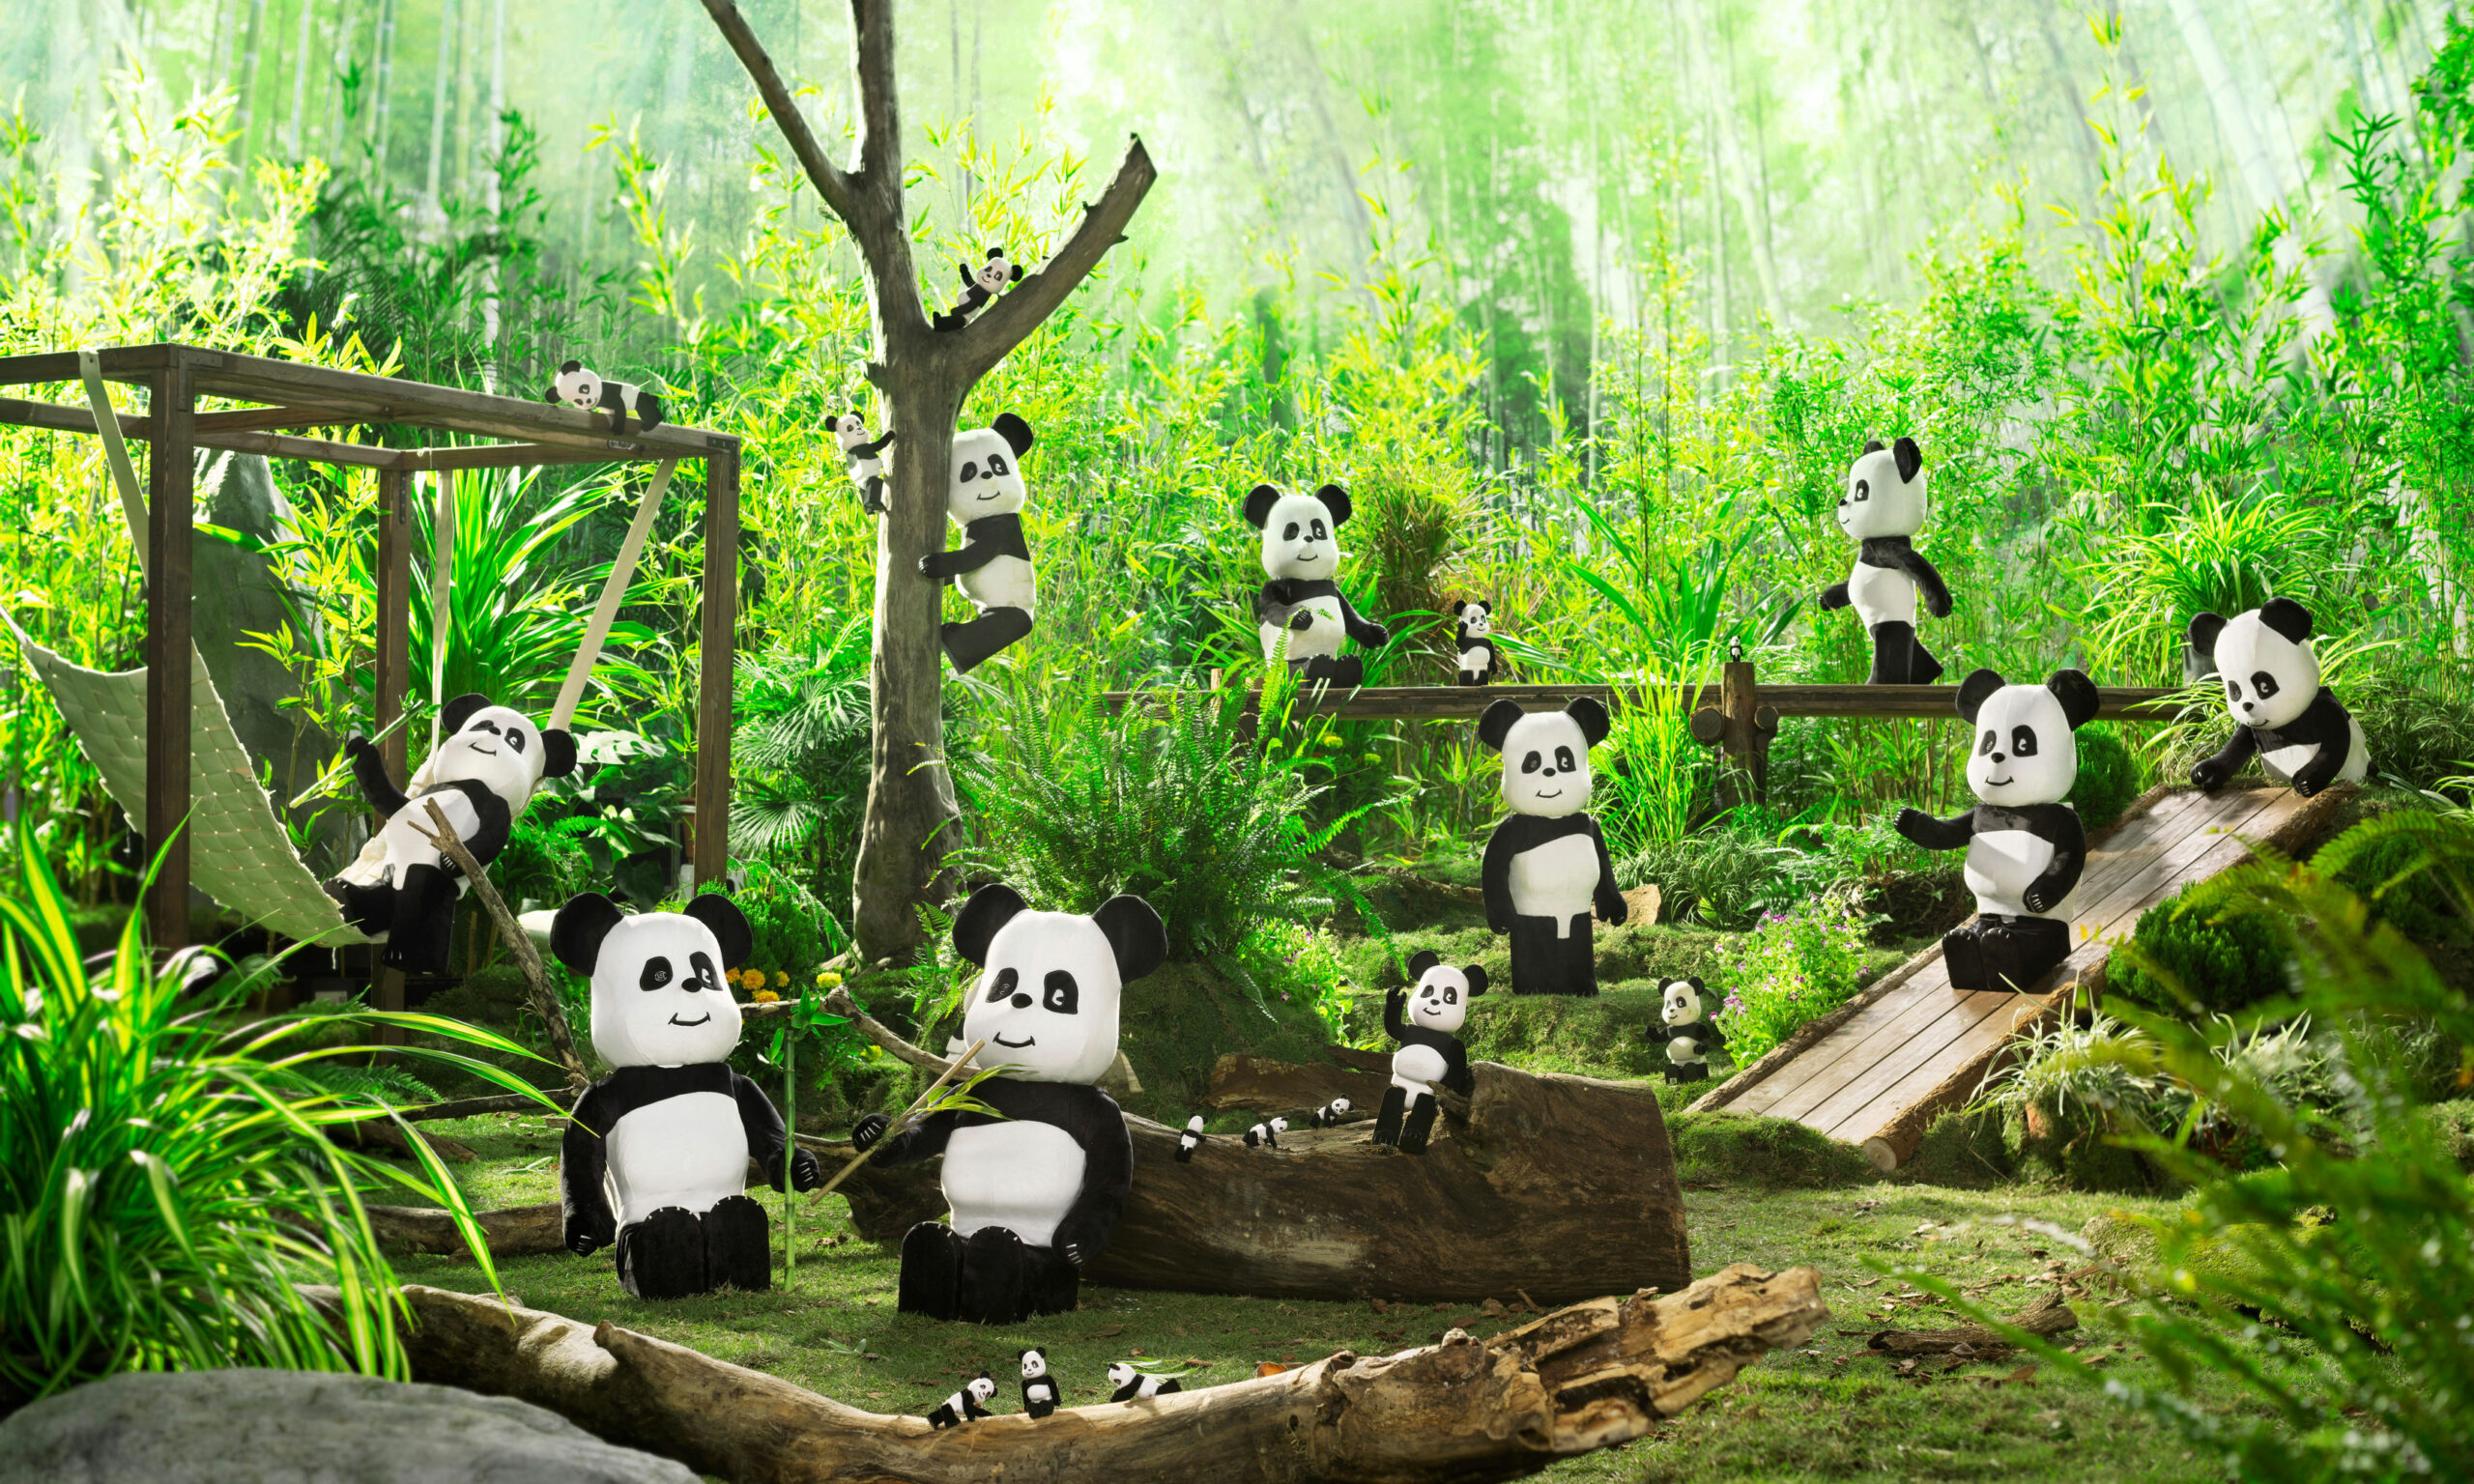 CLOT x MEDICOM TOY BE@RBRICK PANDA 大熊猫登场